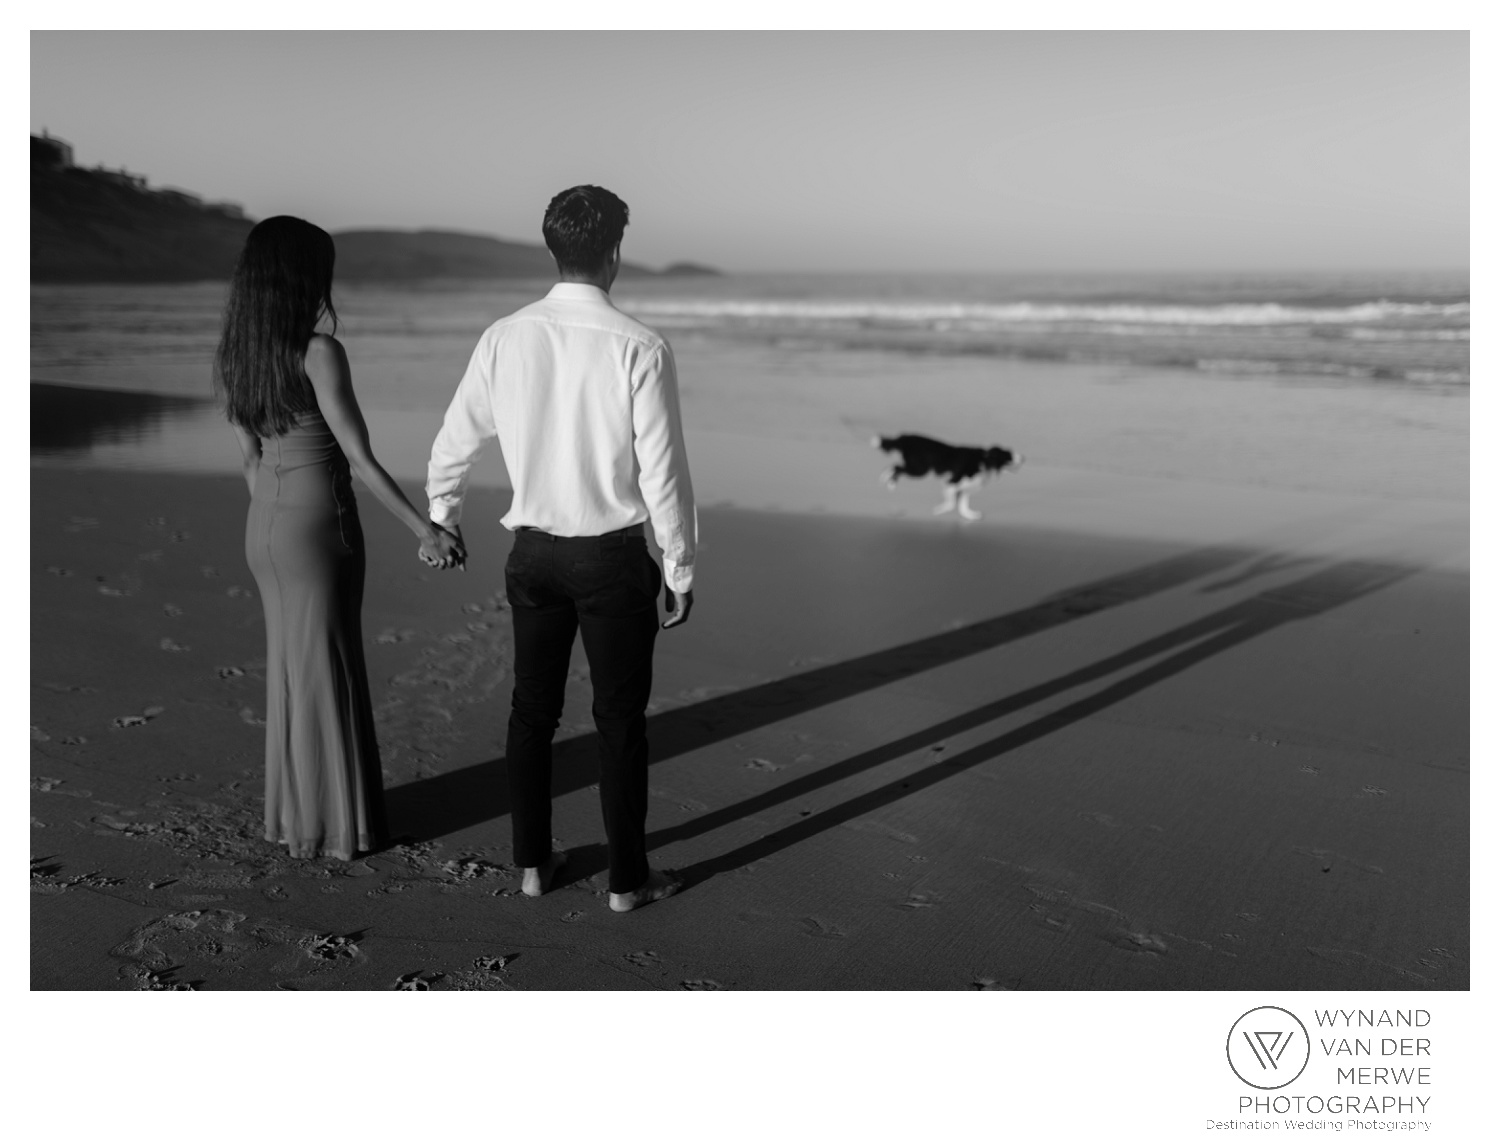 WvdM_engagementshoot_engaged_couple_prewedding_llandudno_cliftonbeach_beach_formal_southafrica_weddingphotographer_greernicolas-42.jpg